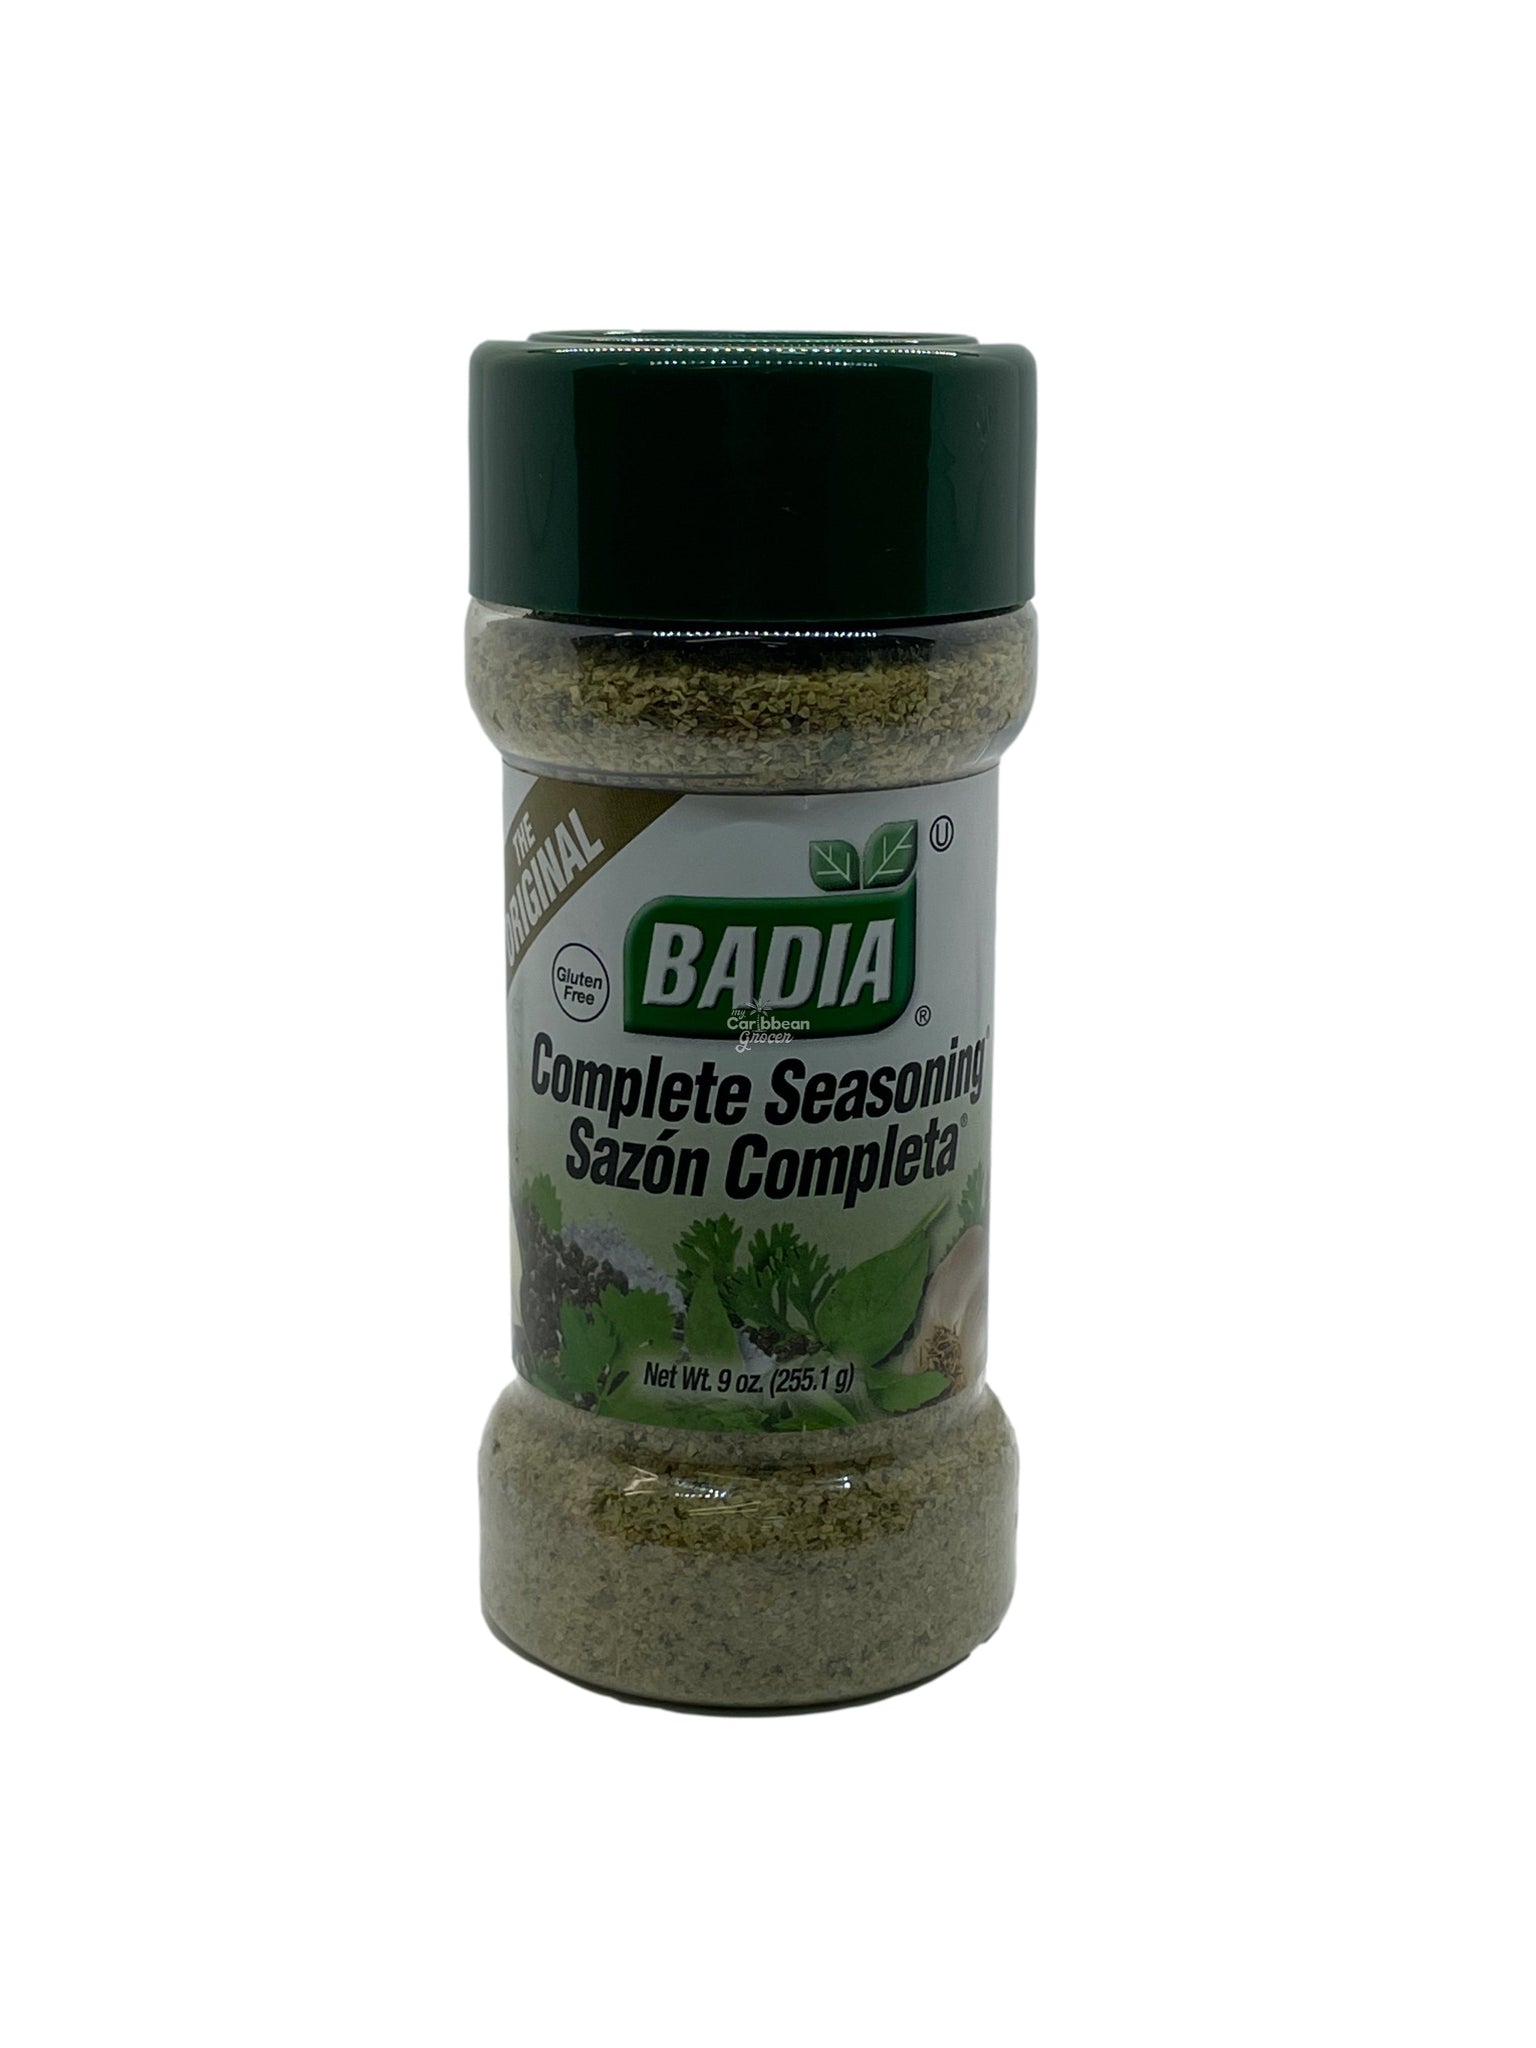 Badia Adobo with Complete Seasoning, 9 oz